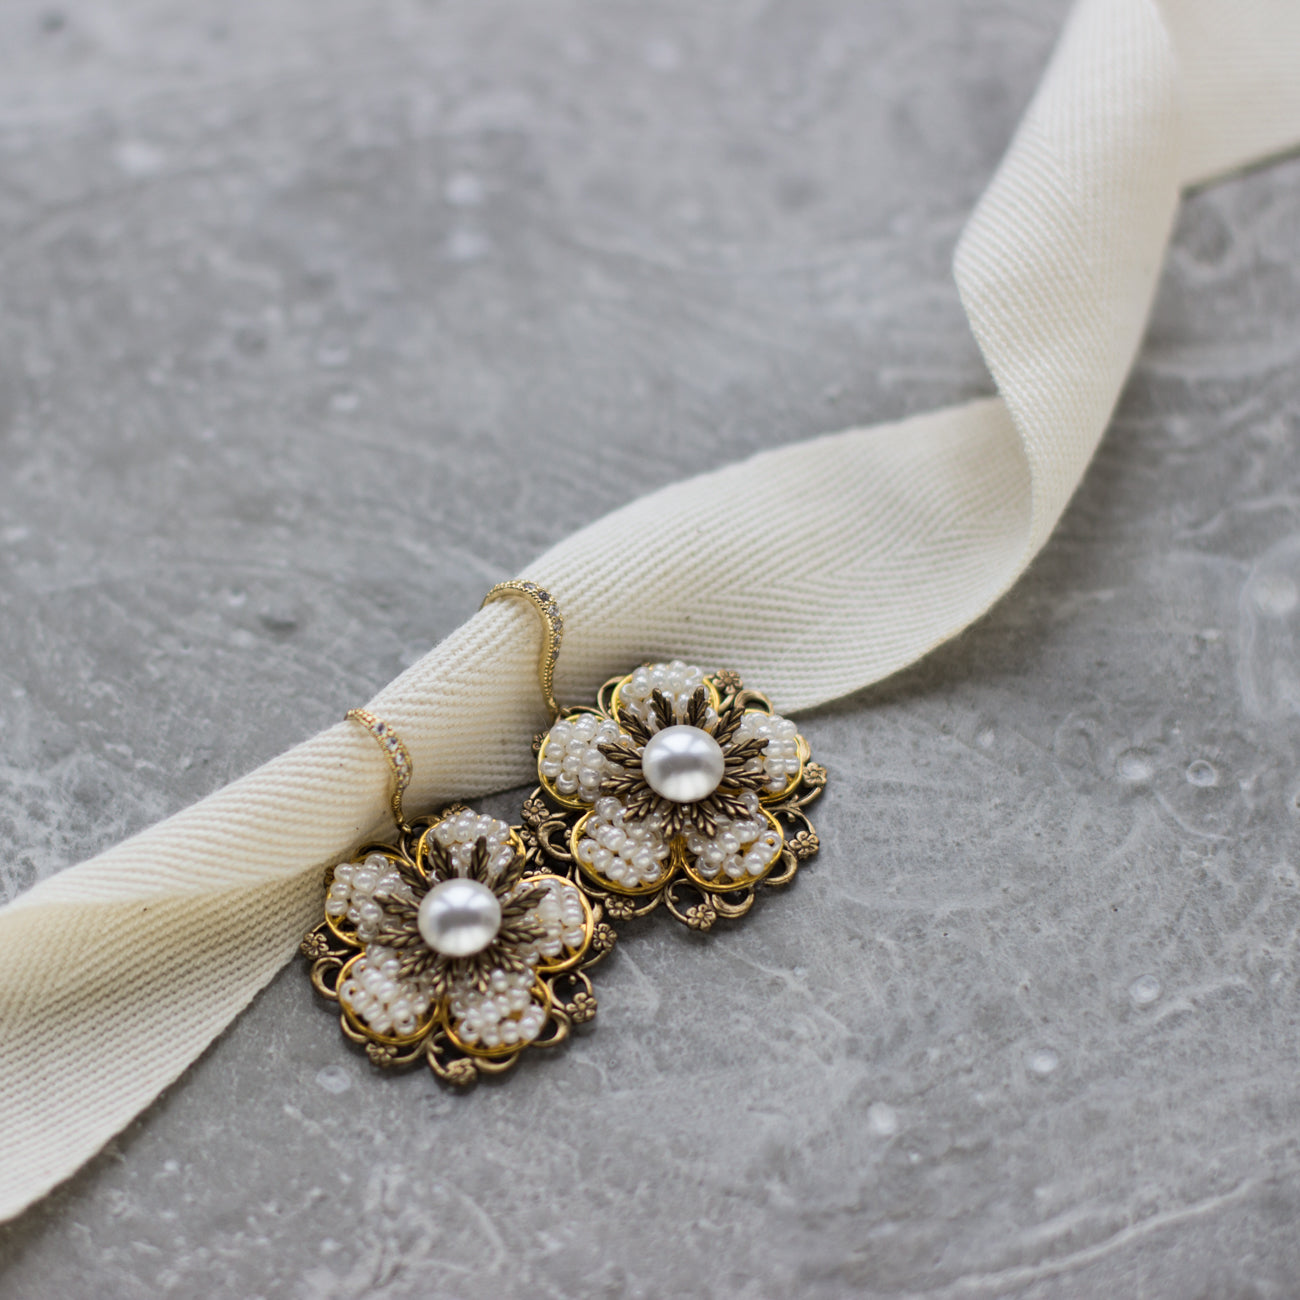 Gold Ivory earrings. Flower earrings. Dangle drop earrings. Swarovski pearl earrings.  Bridal pearl jewelry. Handmade accessories. Vintage style accessories. Ear wire earrings. Wedding jewelry.